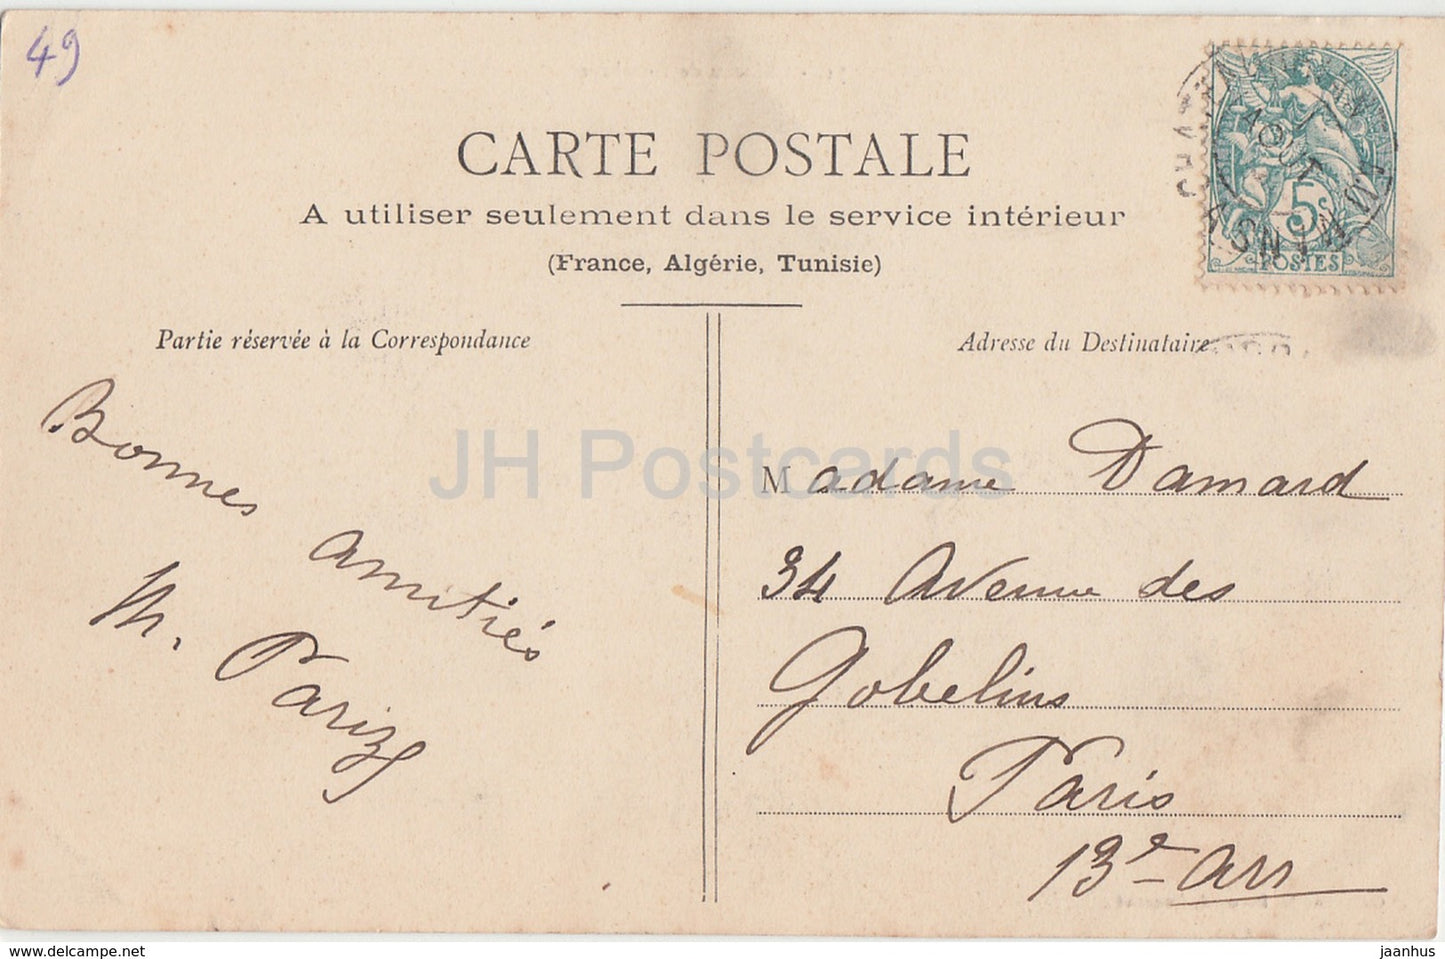 Chateau de Combree - castle - 34 - old postcard - France - used